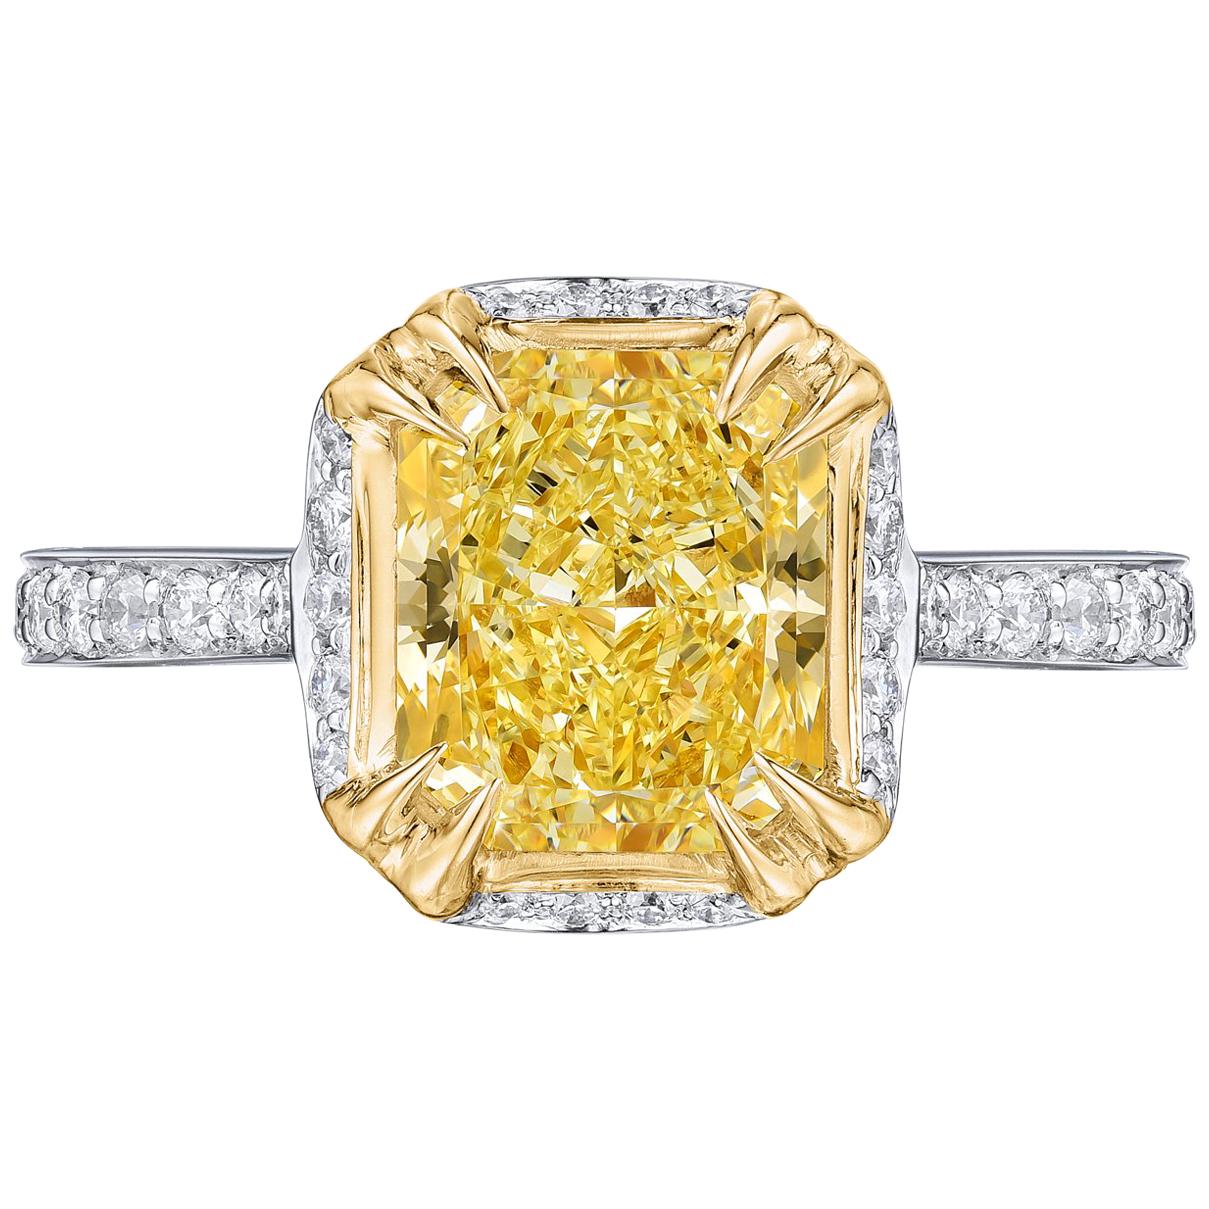 GIA Certified 2.33 Carat Fancy Yellow Radiant Diamond Ring in Platinum